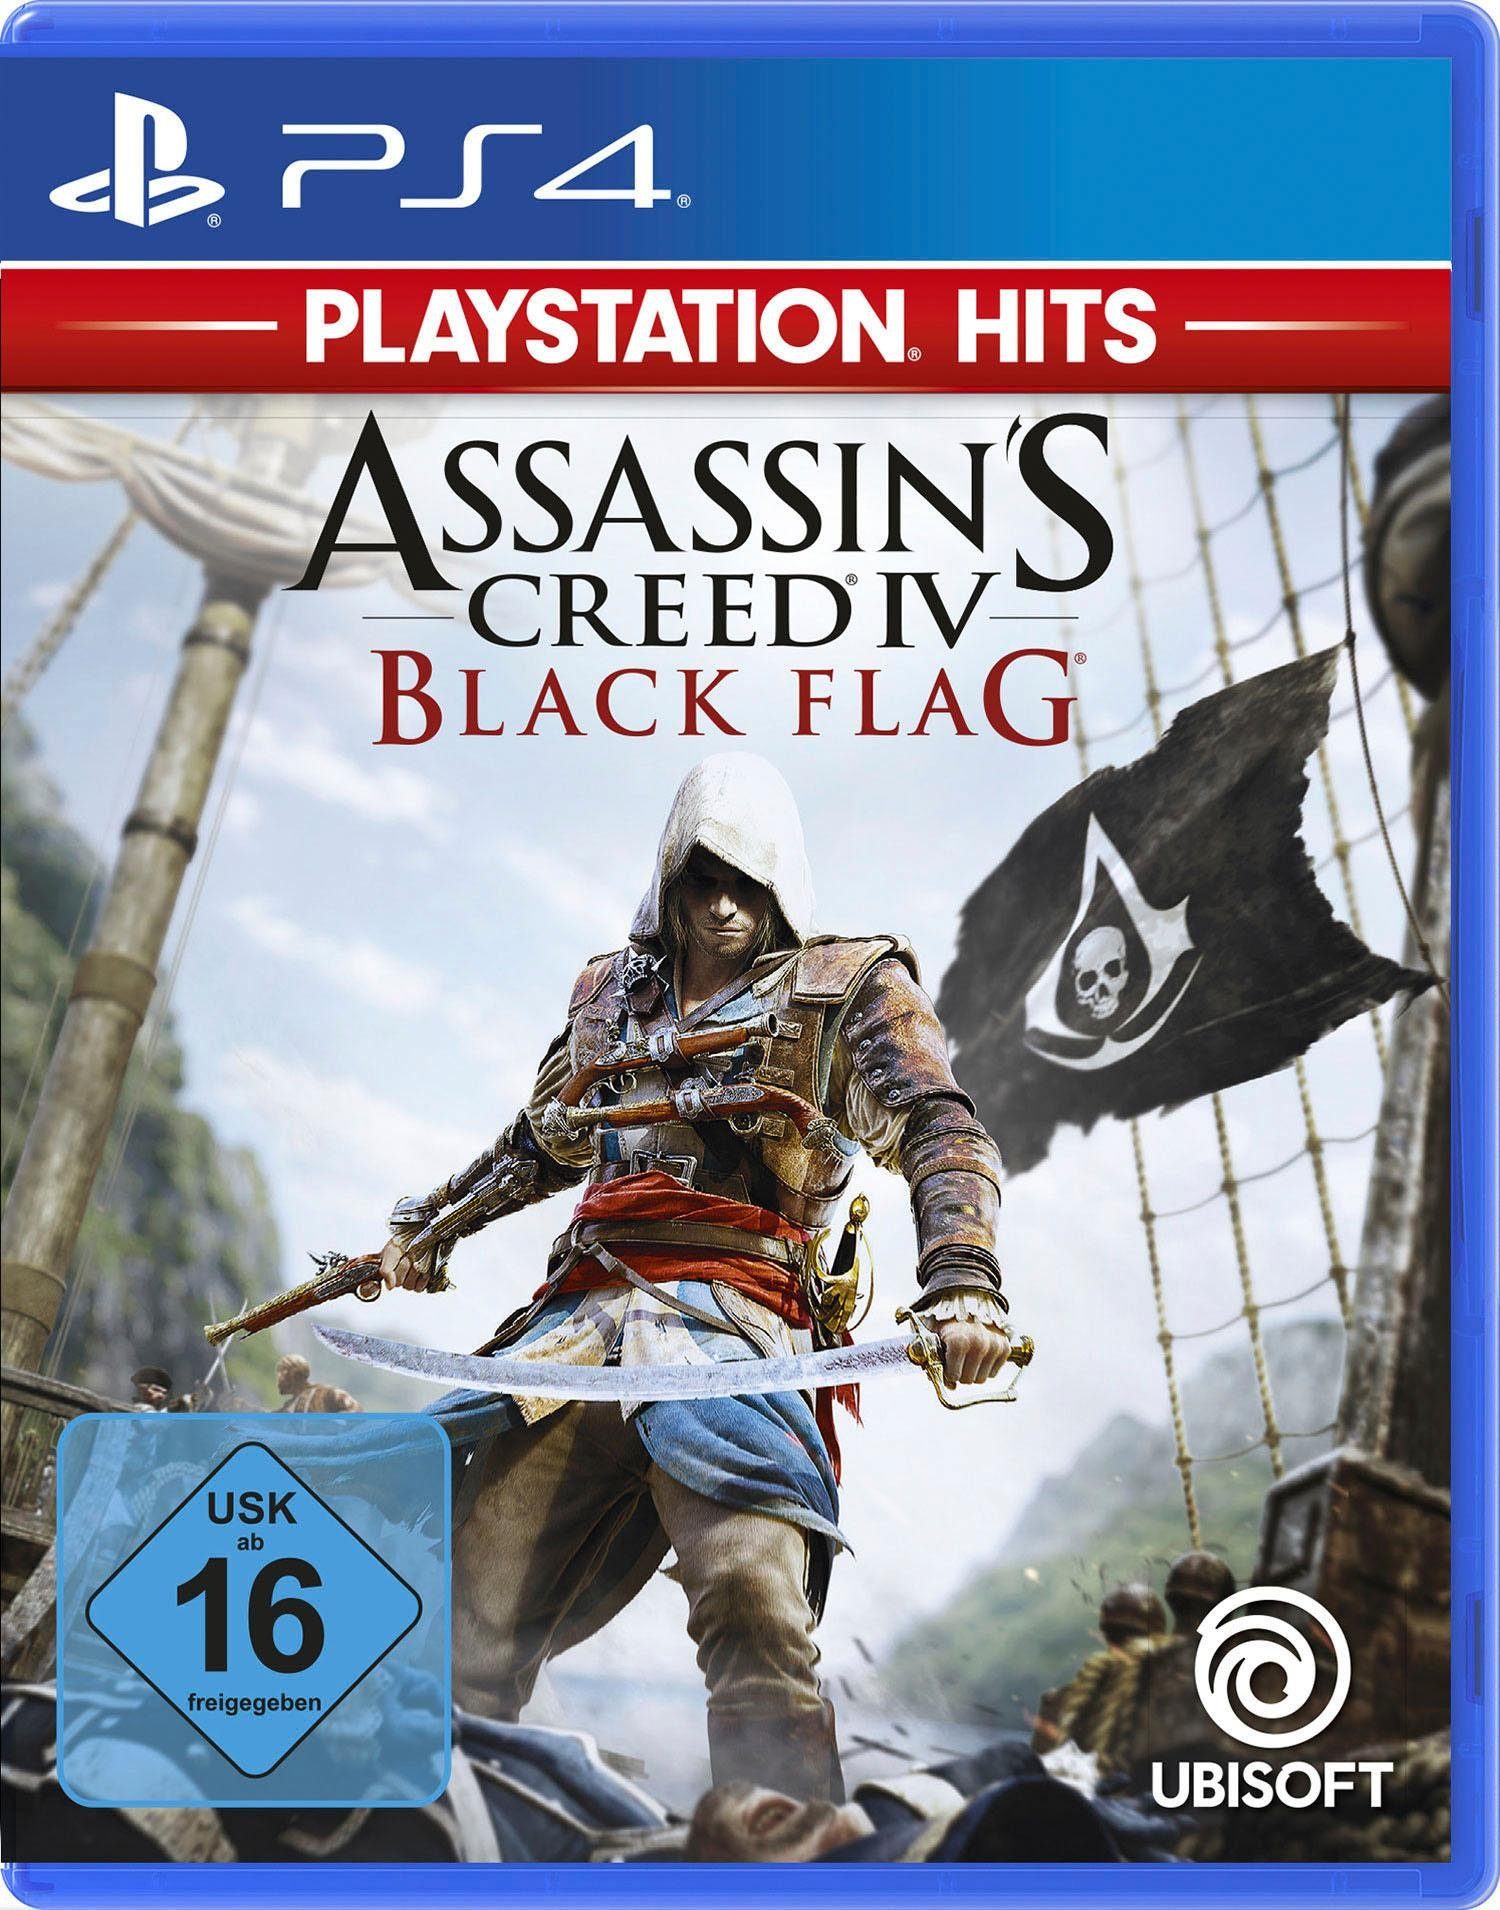 4, 4 Software Flag Pyramide Assassin's Creed UBISOFT PlayStation Black